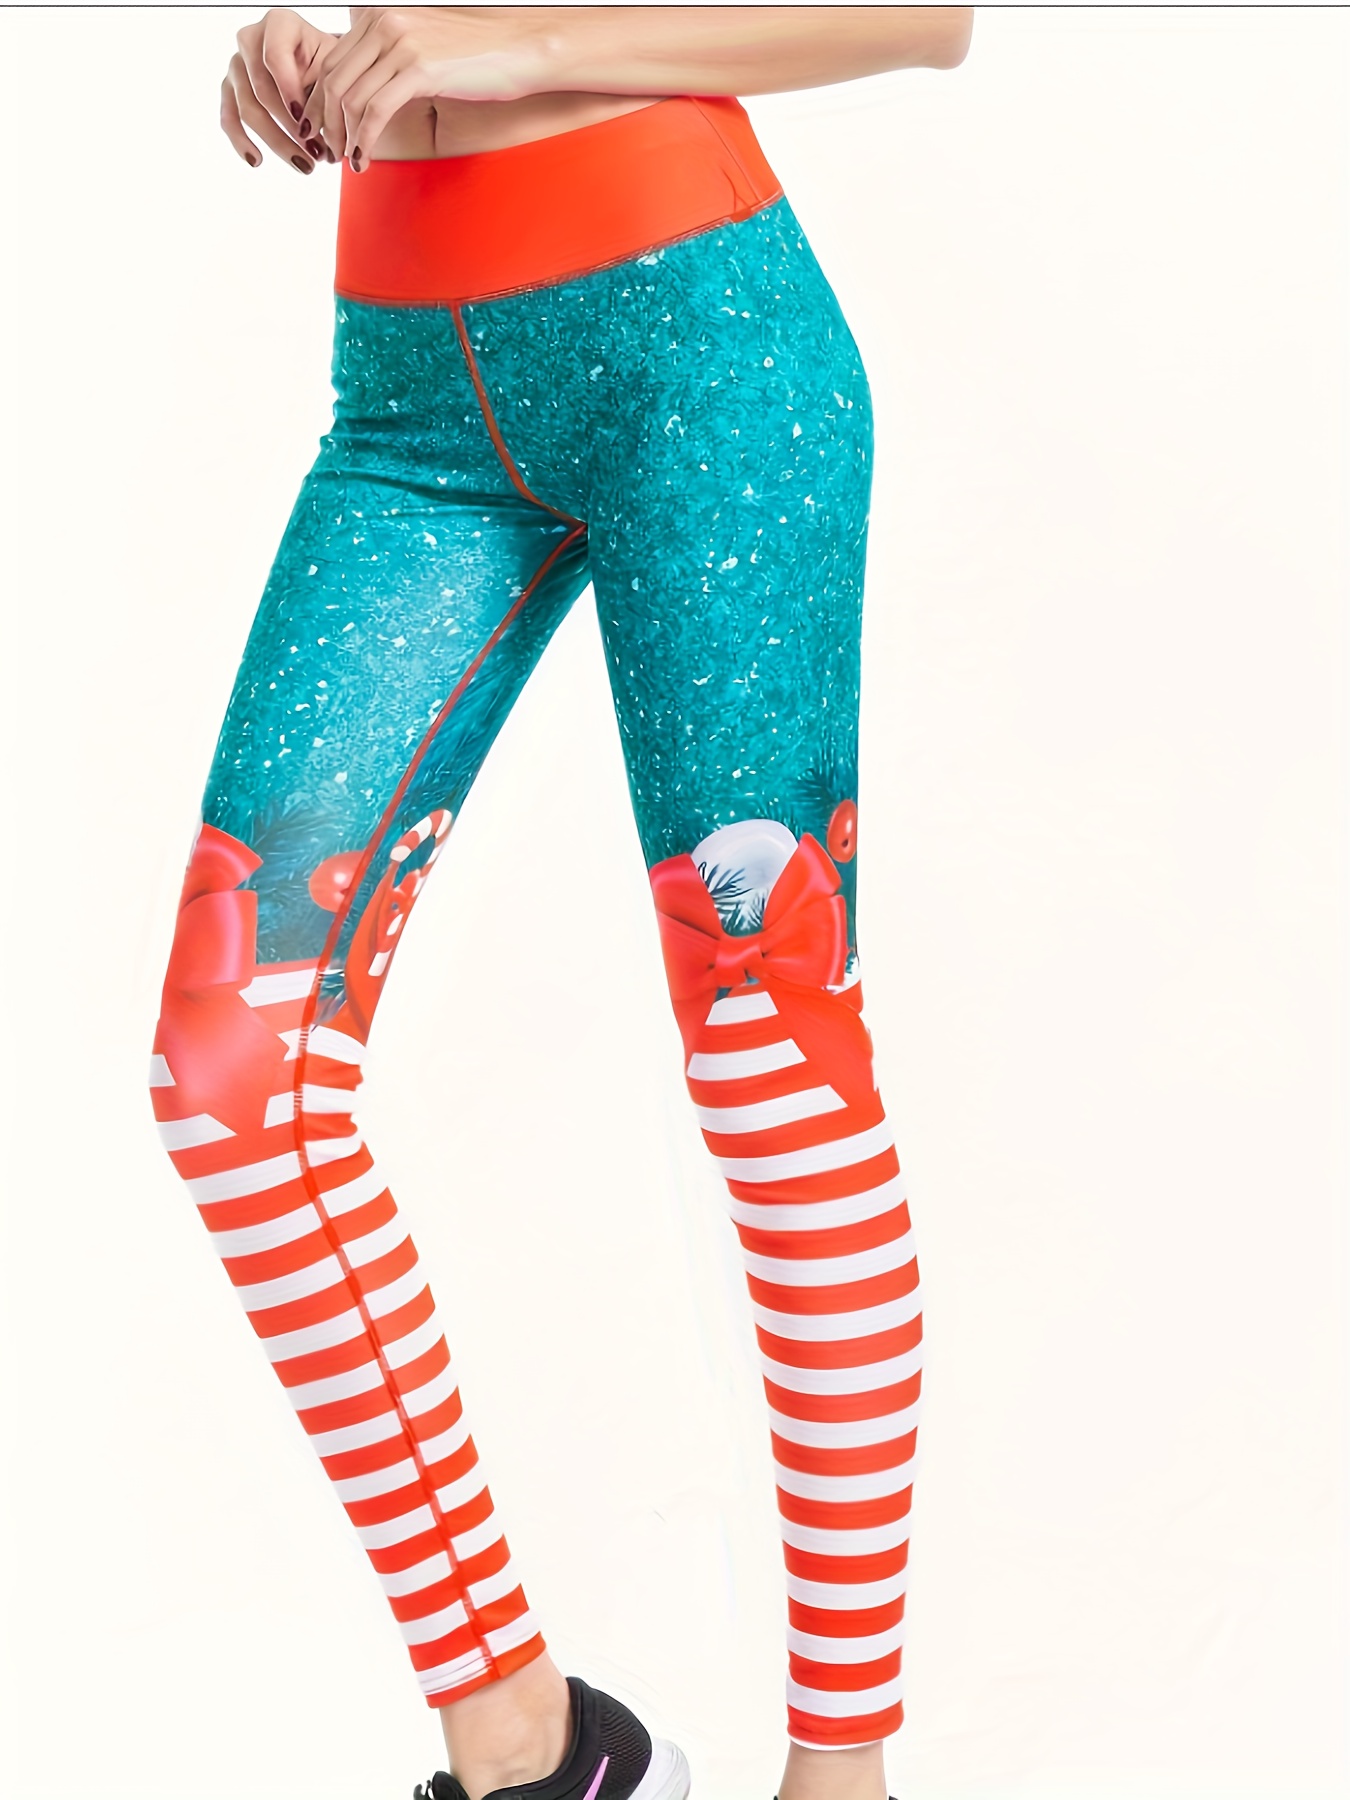 EHQJNJ Workout Leggings Yoga Pants Plus Size Long Womens Ladies Digital 3D  Printing Merry Christmas Witch Leggings Pants for Yoga Running Gym Yoga